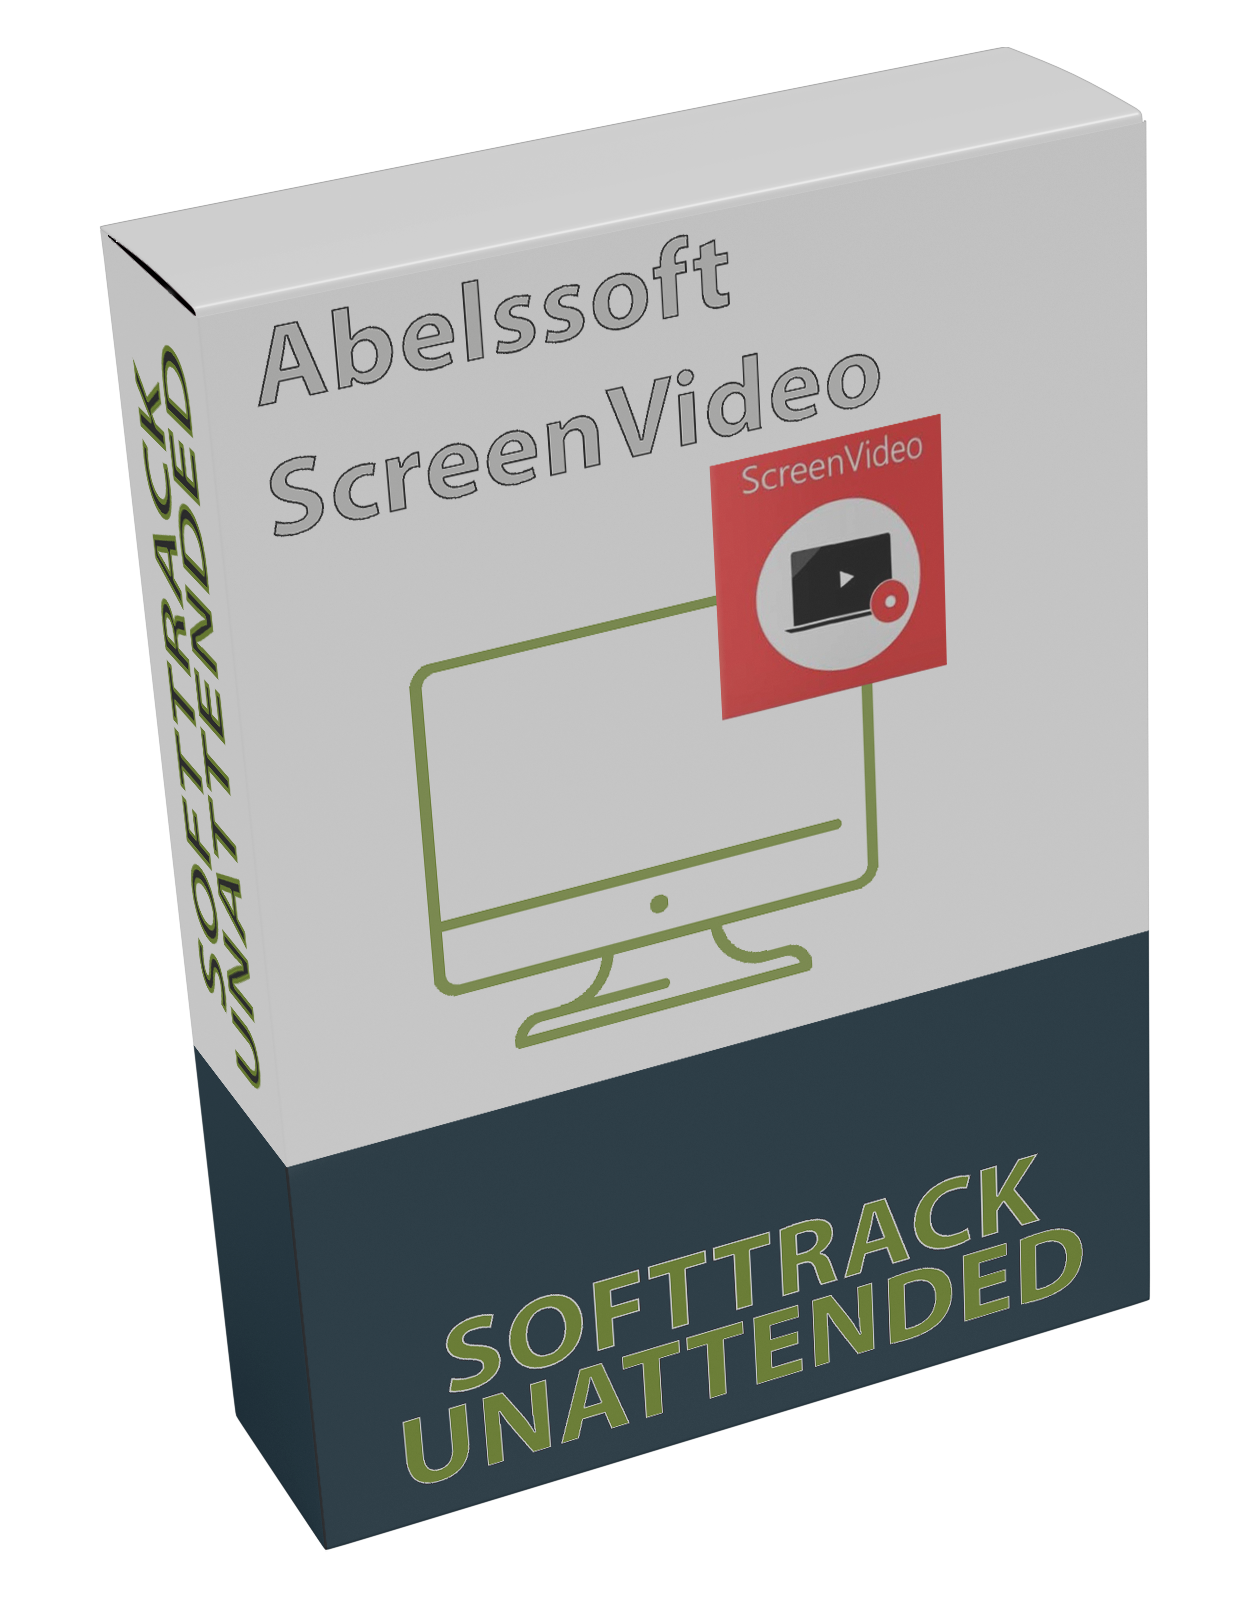 Abelssoft ScreenVideo 2022 v5.02.35953 UNATTENDED